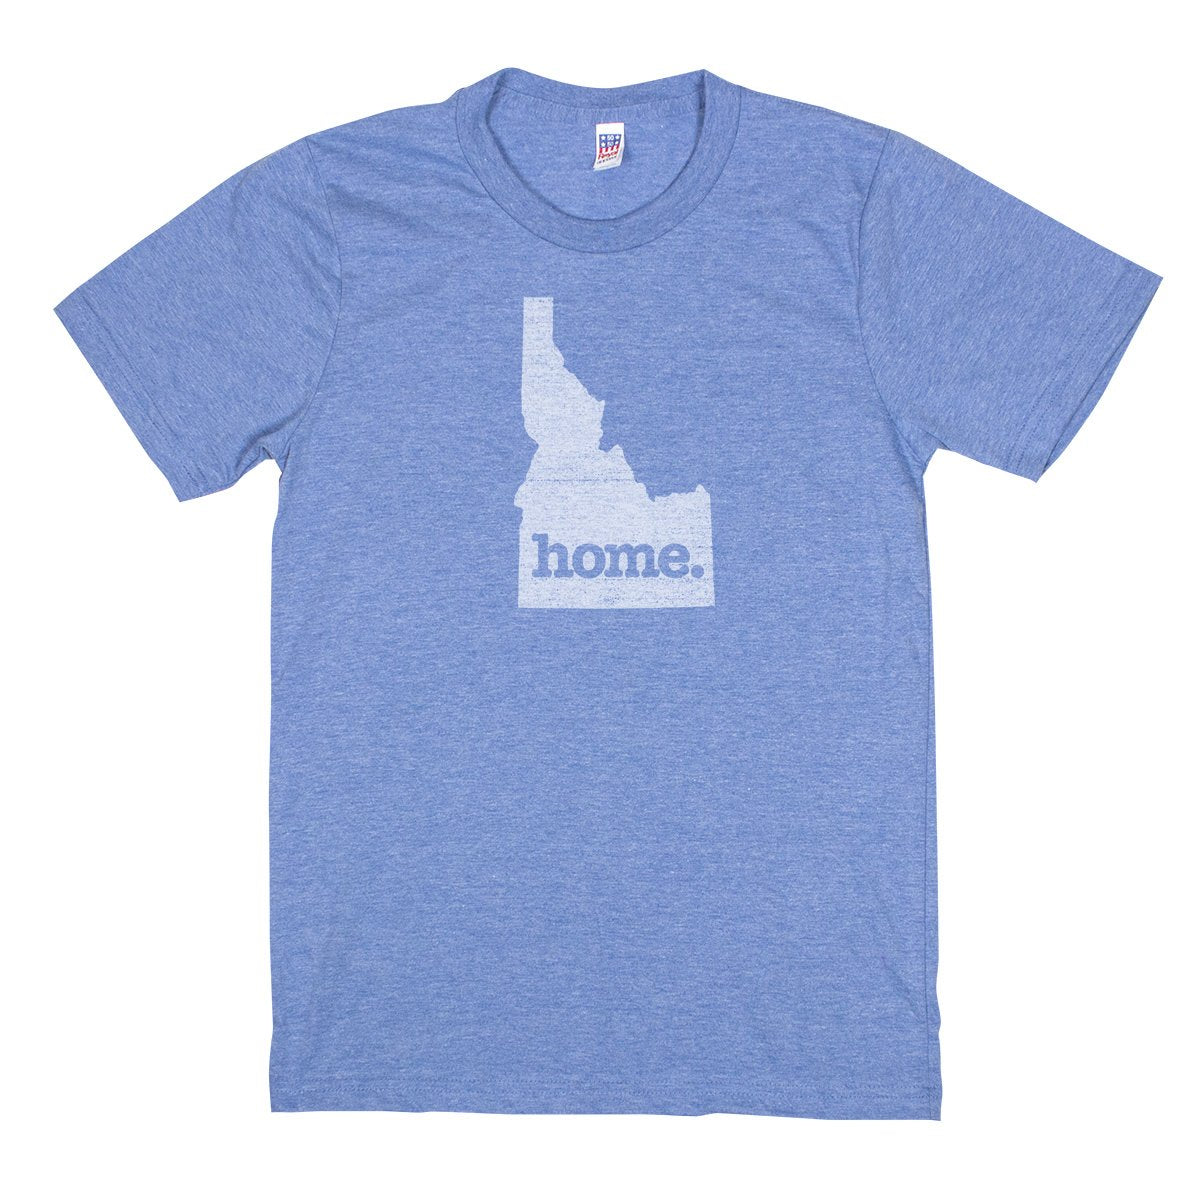 home. Men’s Unisex T-Shirt - Colorado